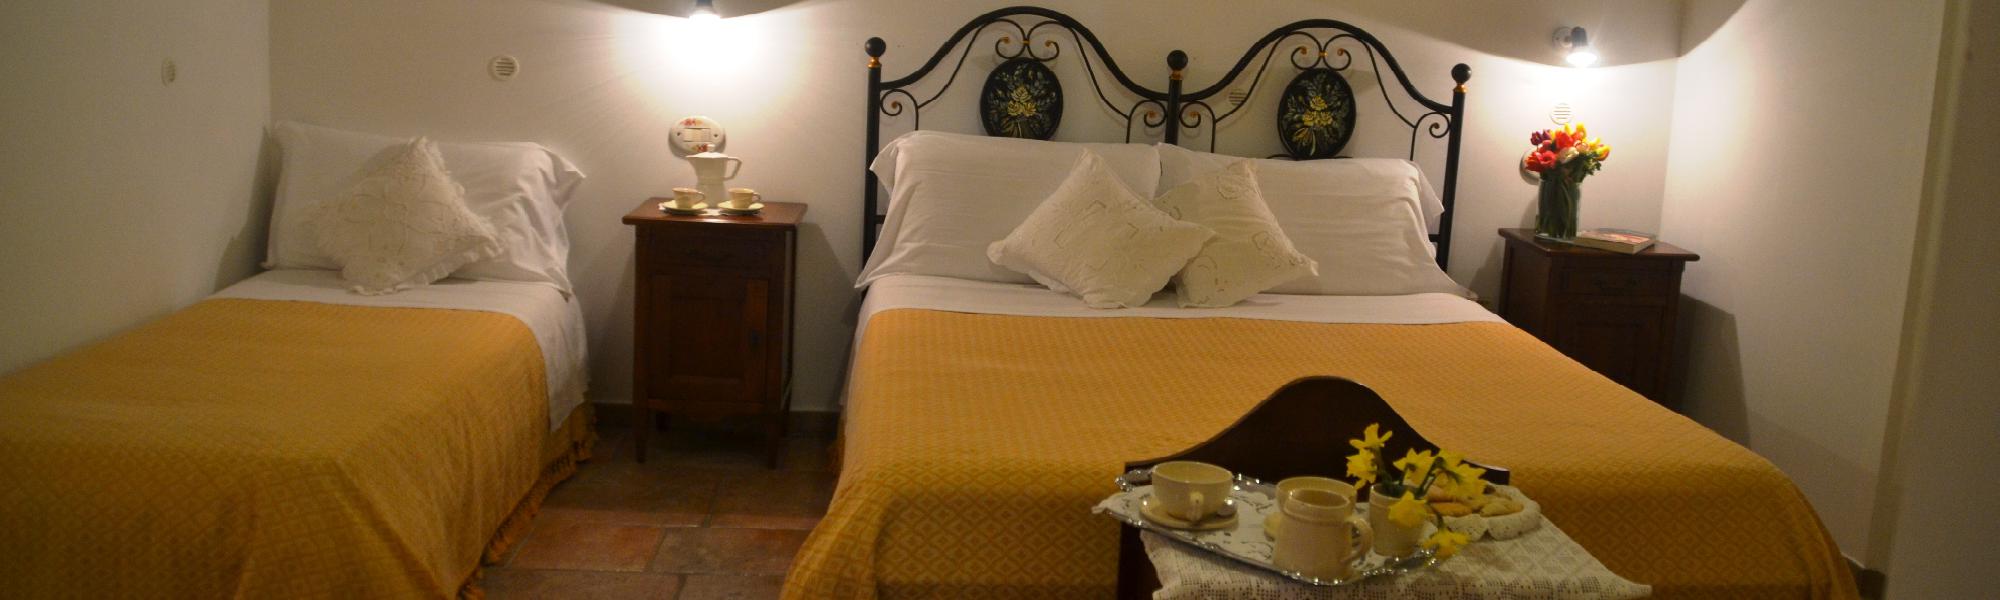 Rental Charming Rooms Ostuni - Agriturismo Apulia - Agriturismo Puglia 17